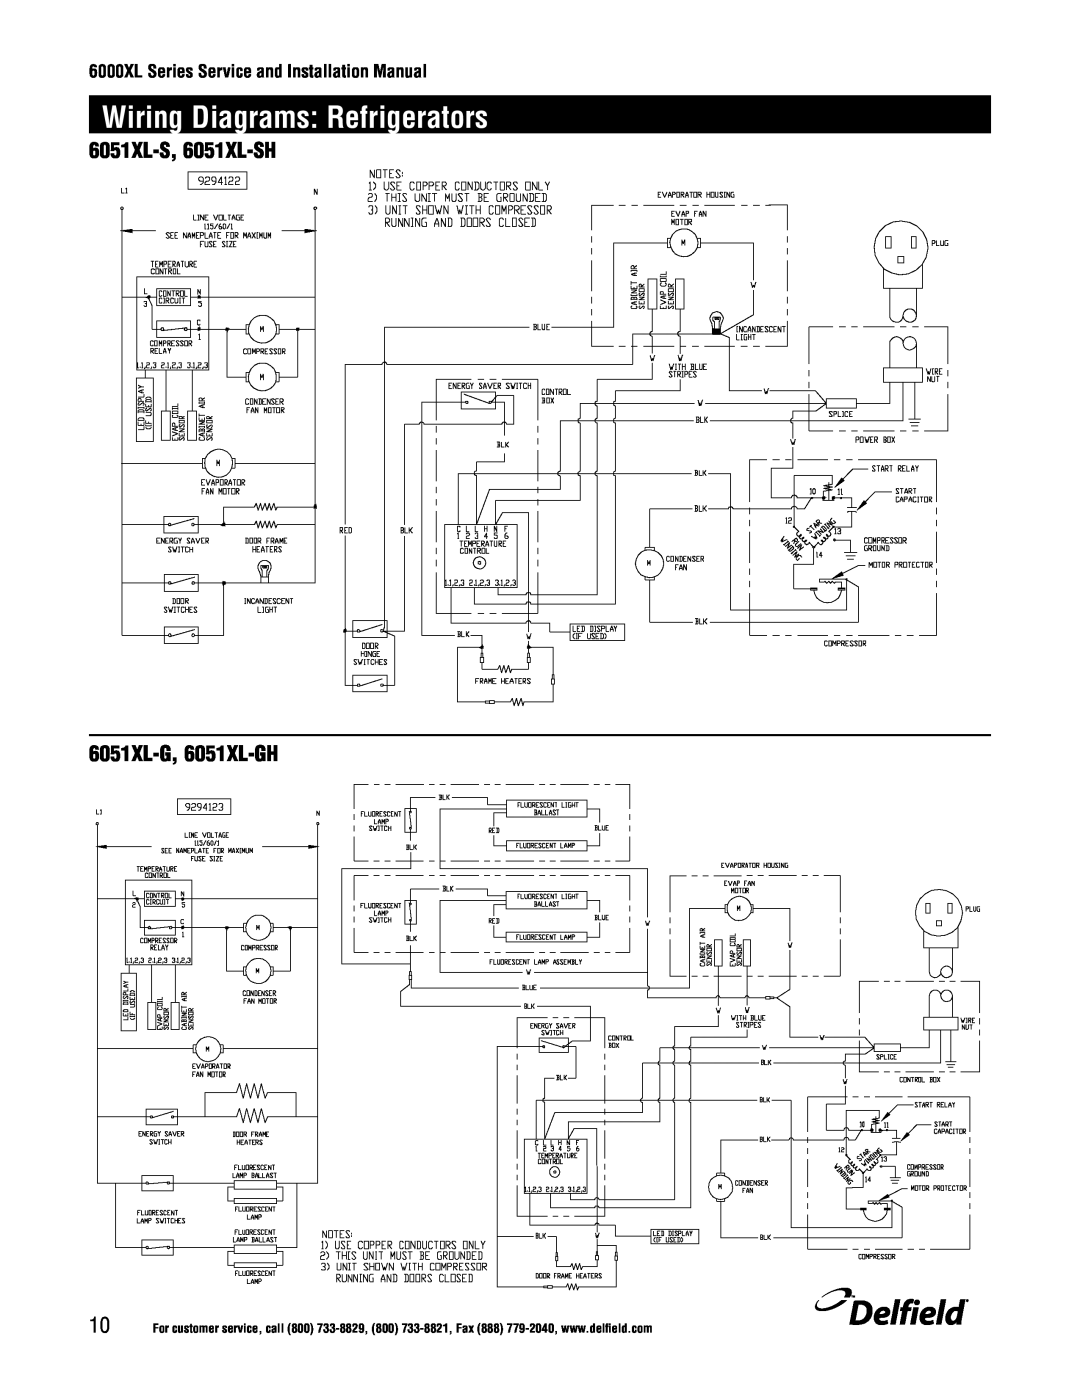 Delfield 6100XL manual 6051XL-S, 6051XL-SH, 6051XL-G, 6051XL-GH, Delfield, Wiring Diagrams: Refrigerators 